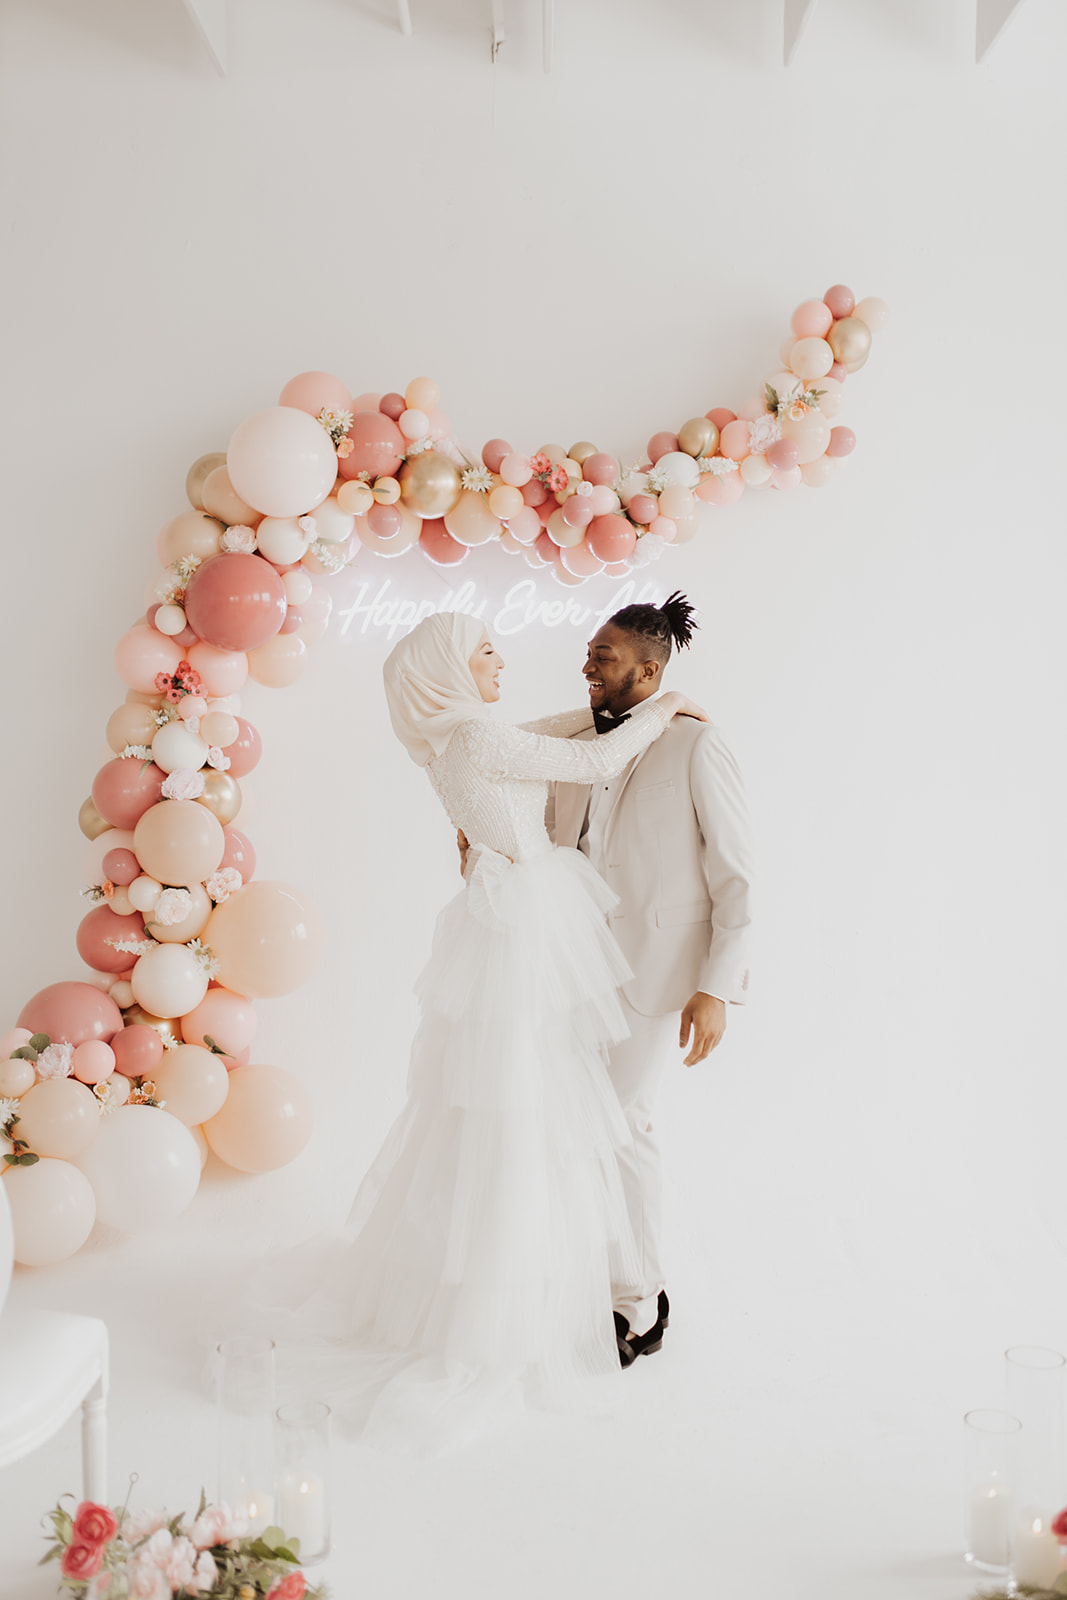 Spring wedding inspo with an adorable balloon chandelier